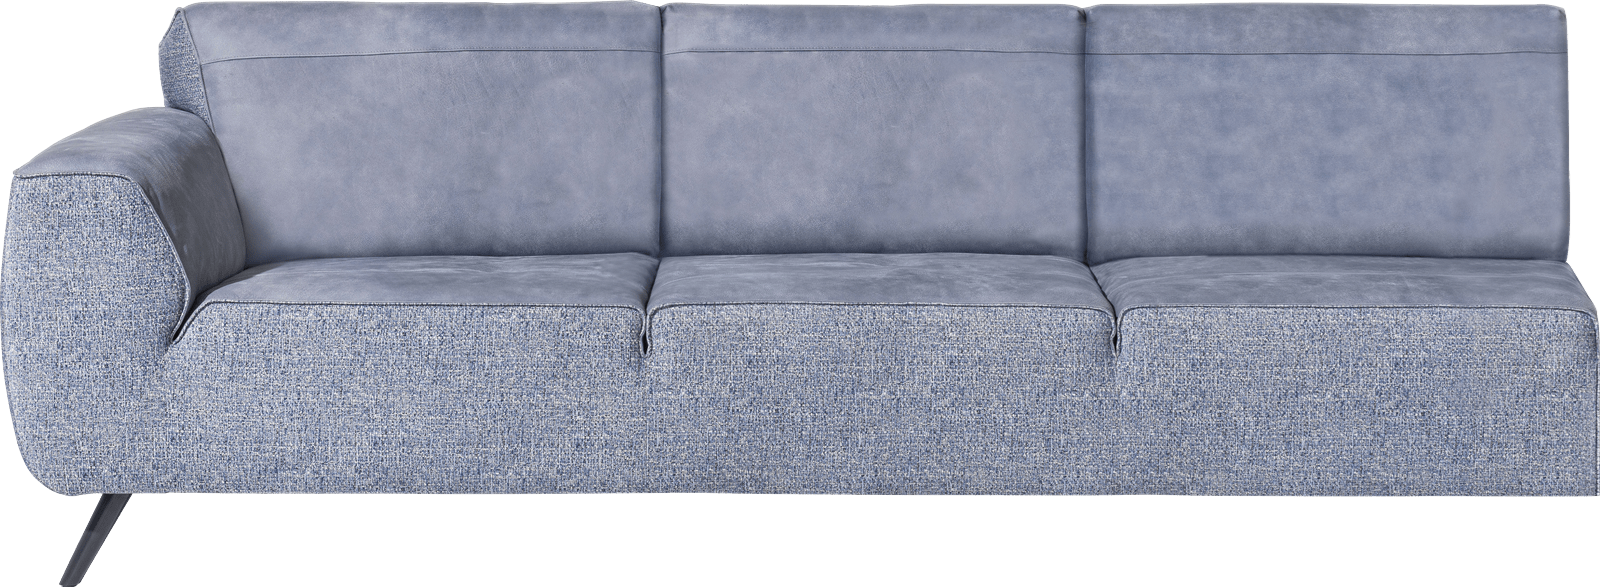 XOOON - Lima - Minimalistisches Design - Sofas - 4-Sitzer Armlehne links